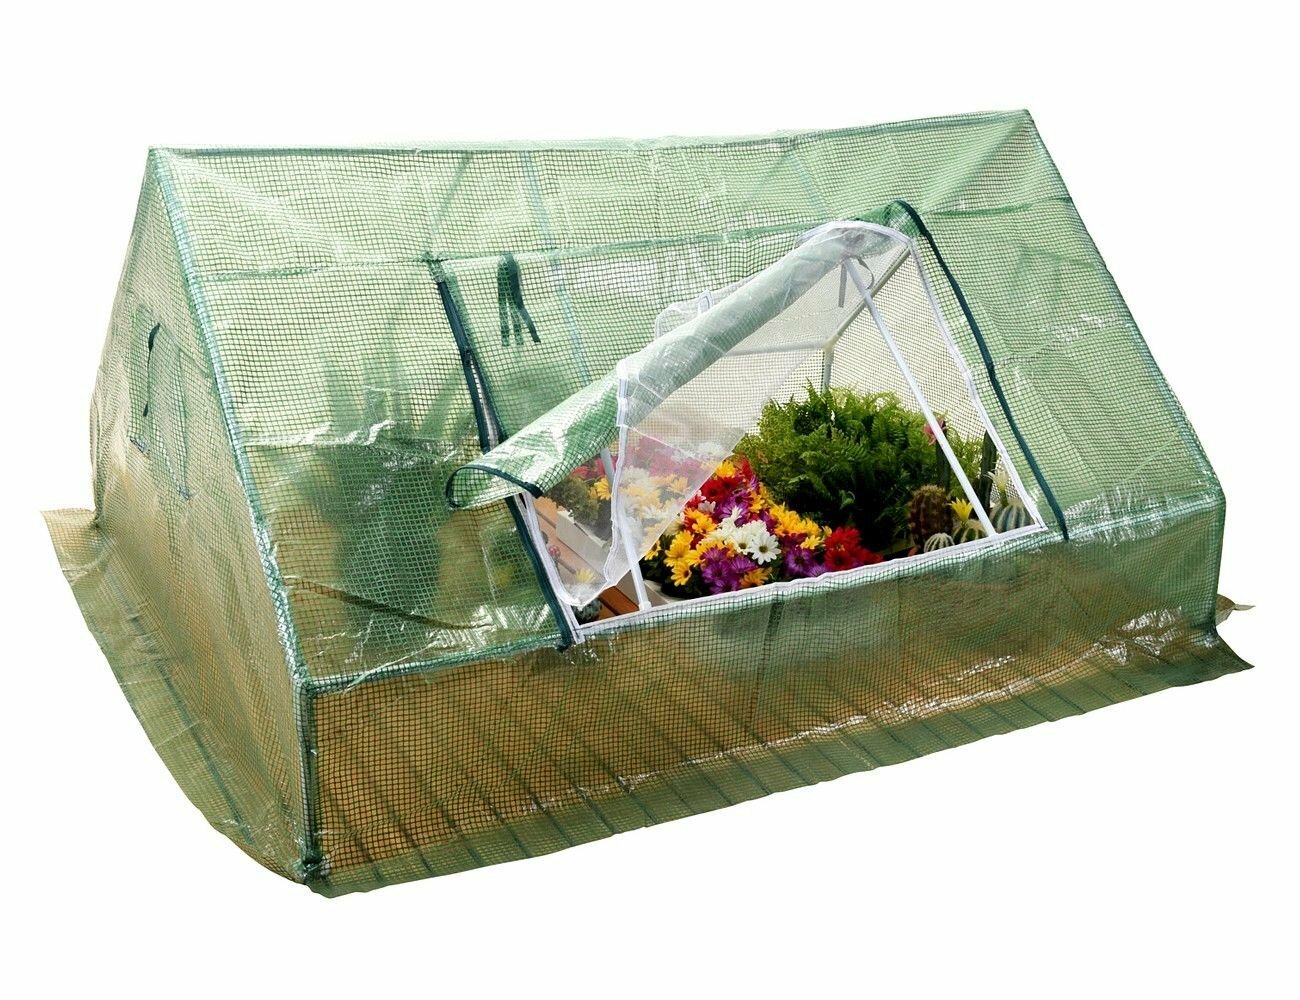 Мини-парник зеленая палатка, полиэтилен, металл, 180х142х93 см, Koopman International X61900770